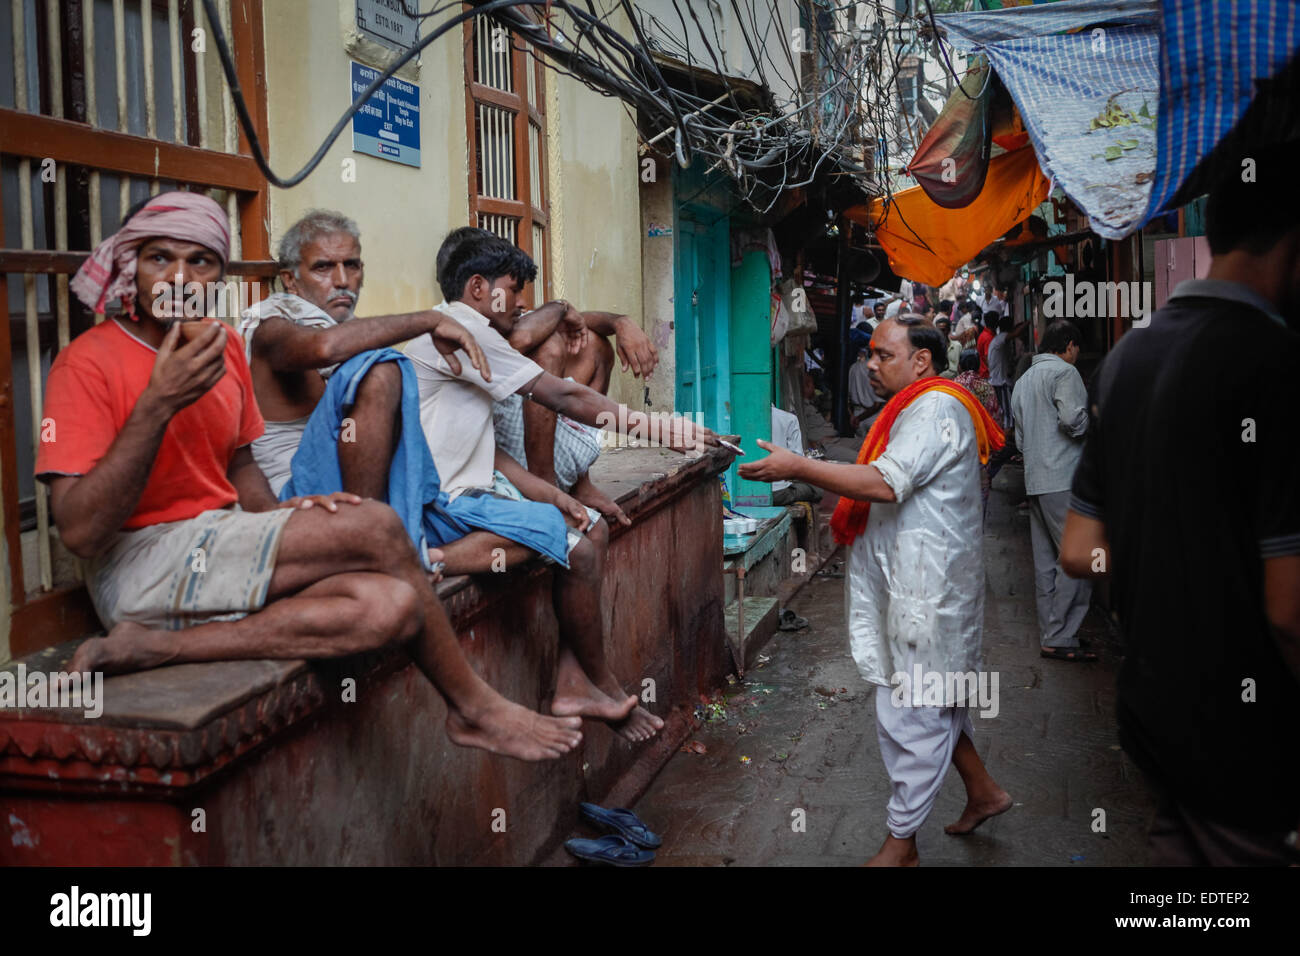 Men enjoying leisure time at an alley in Varanasi, India. Stock Photo